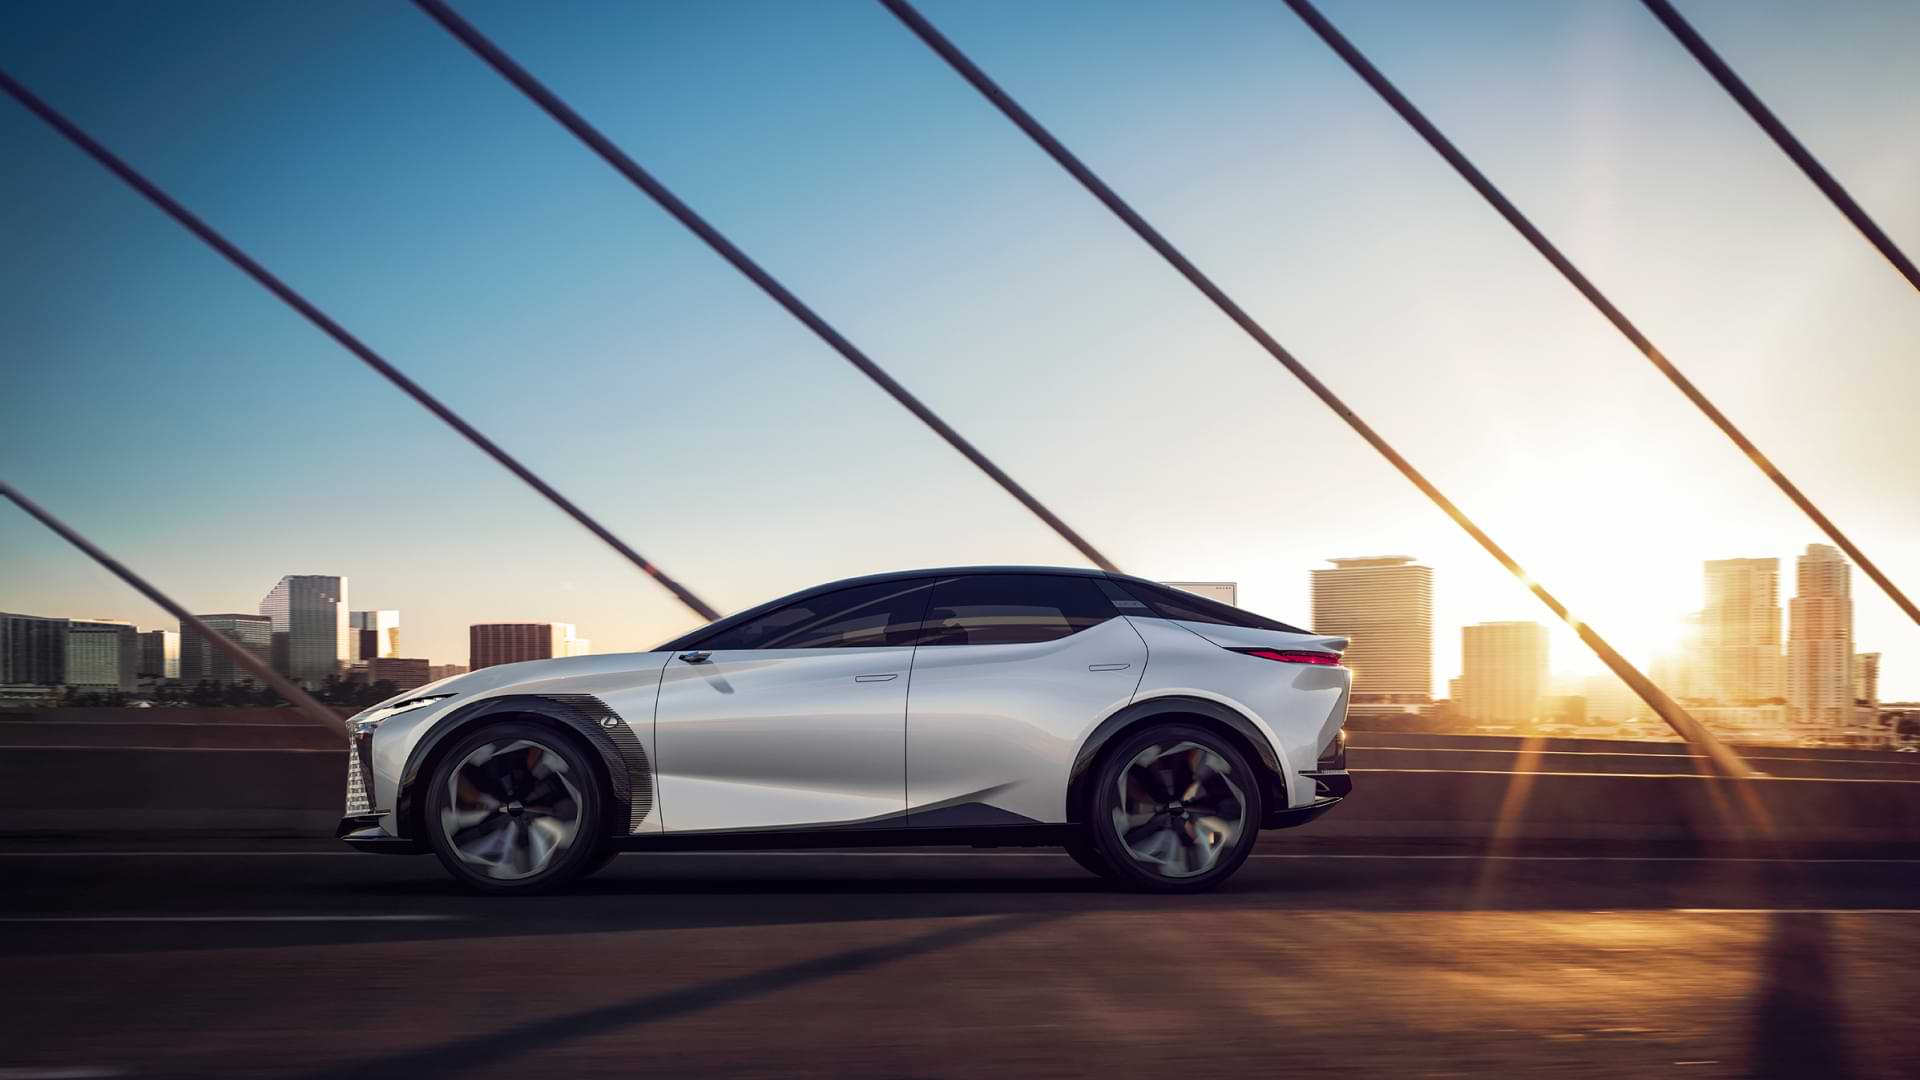 Concept vehicle LF-Z drives across a bridge during sunset